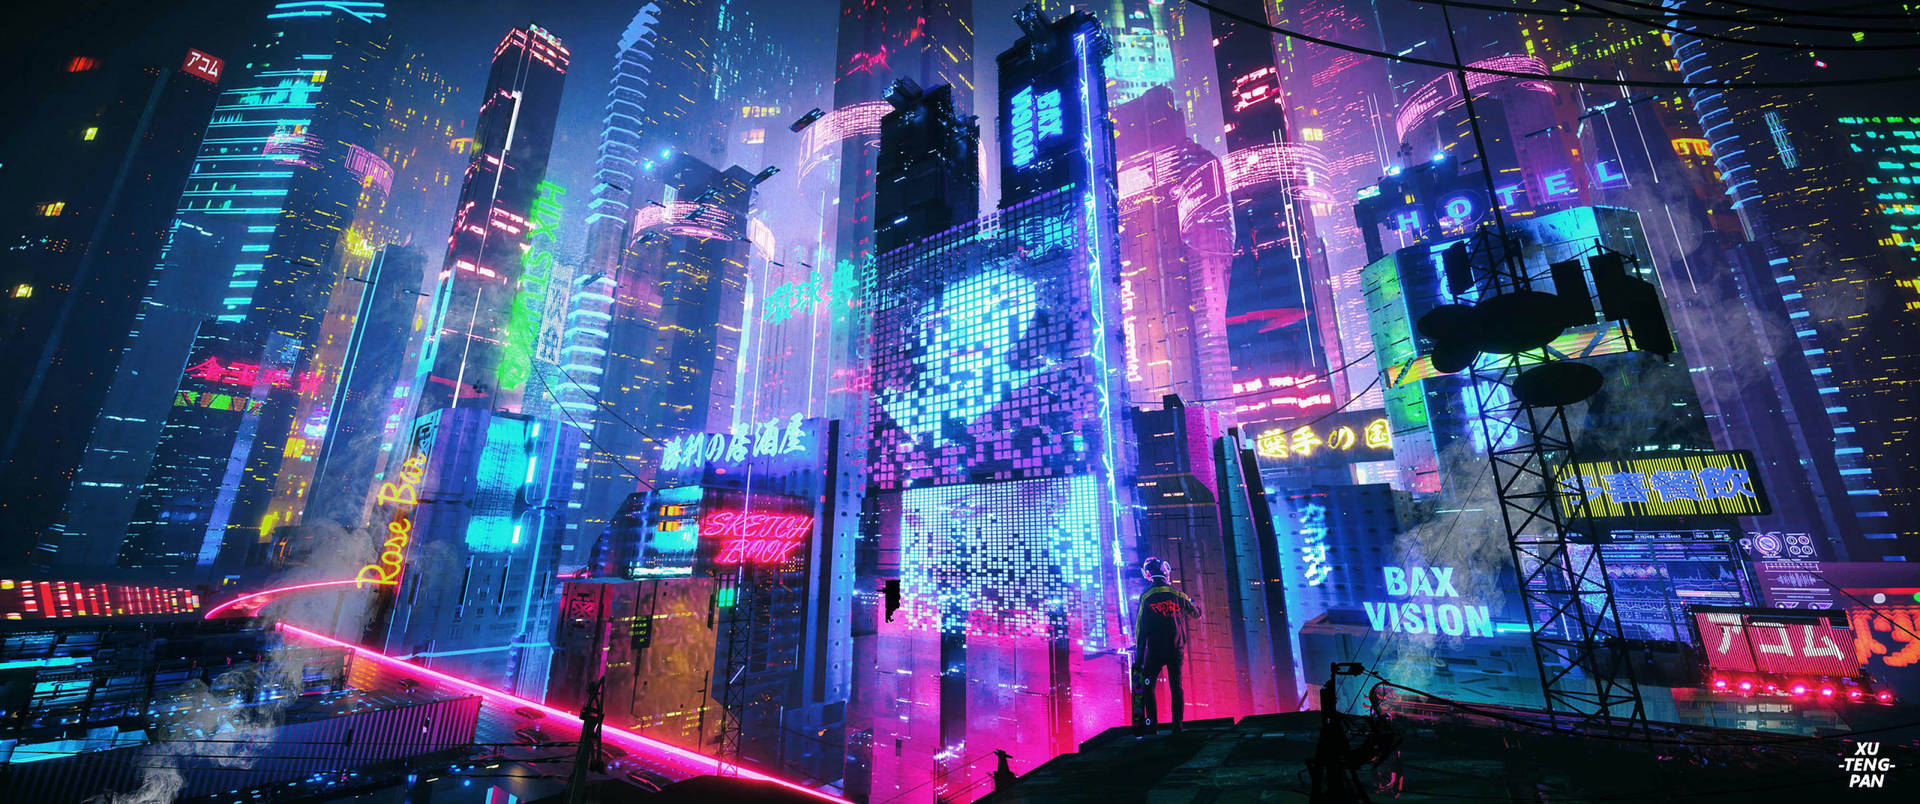 3440x1440 City Futuristic In Neon Lights Background